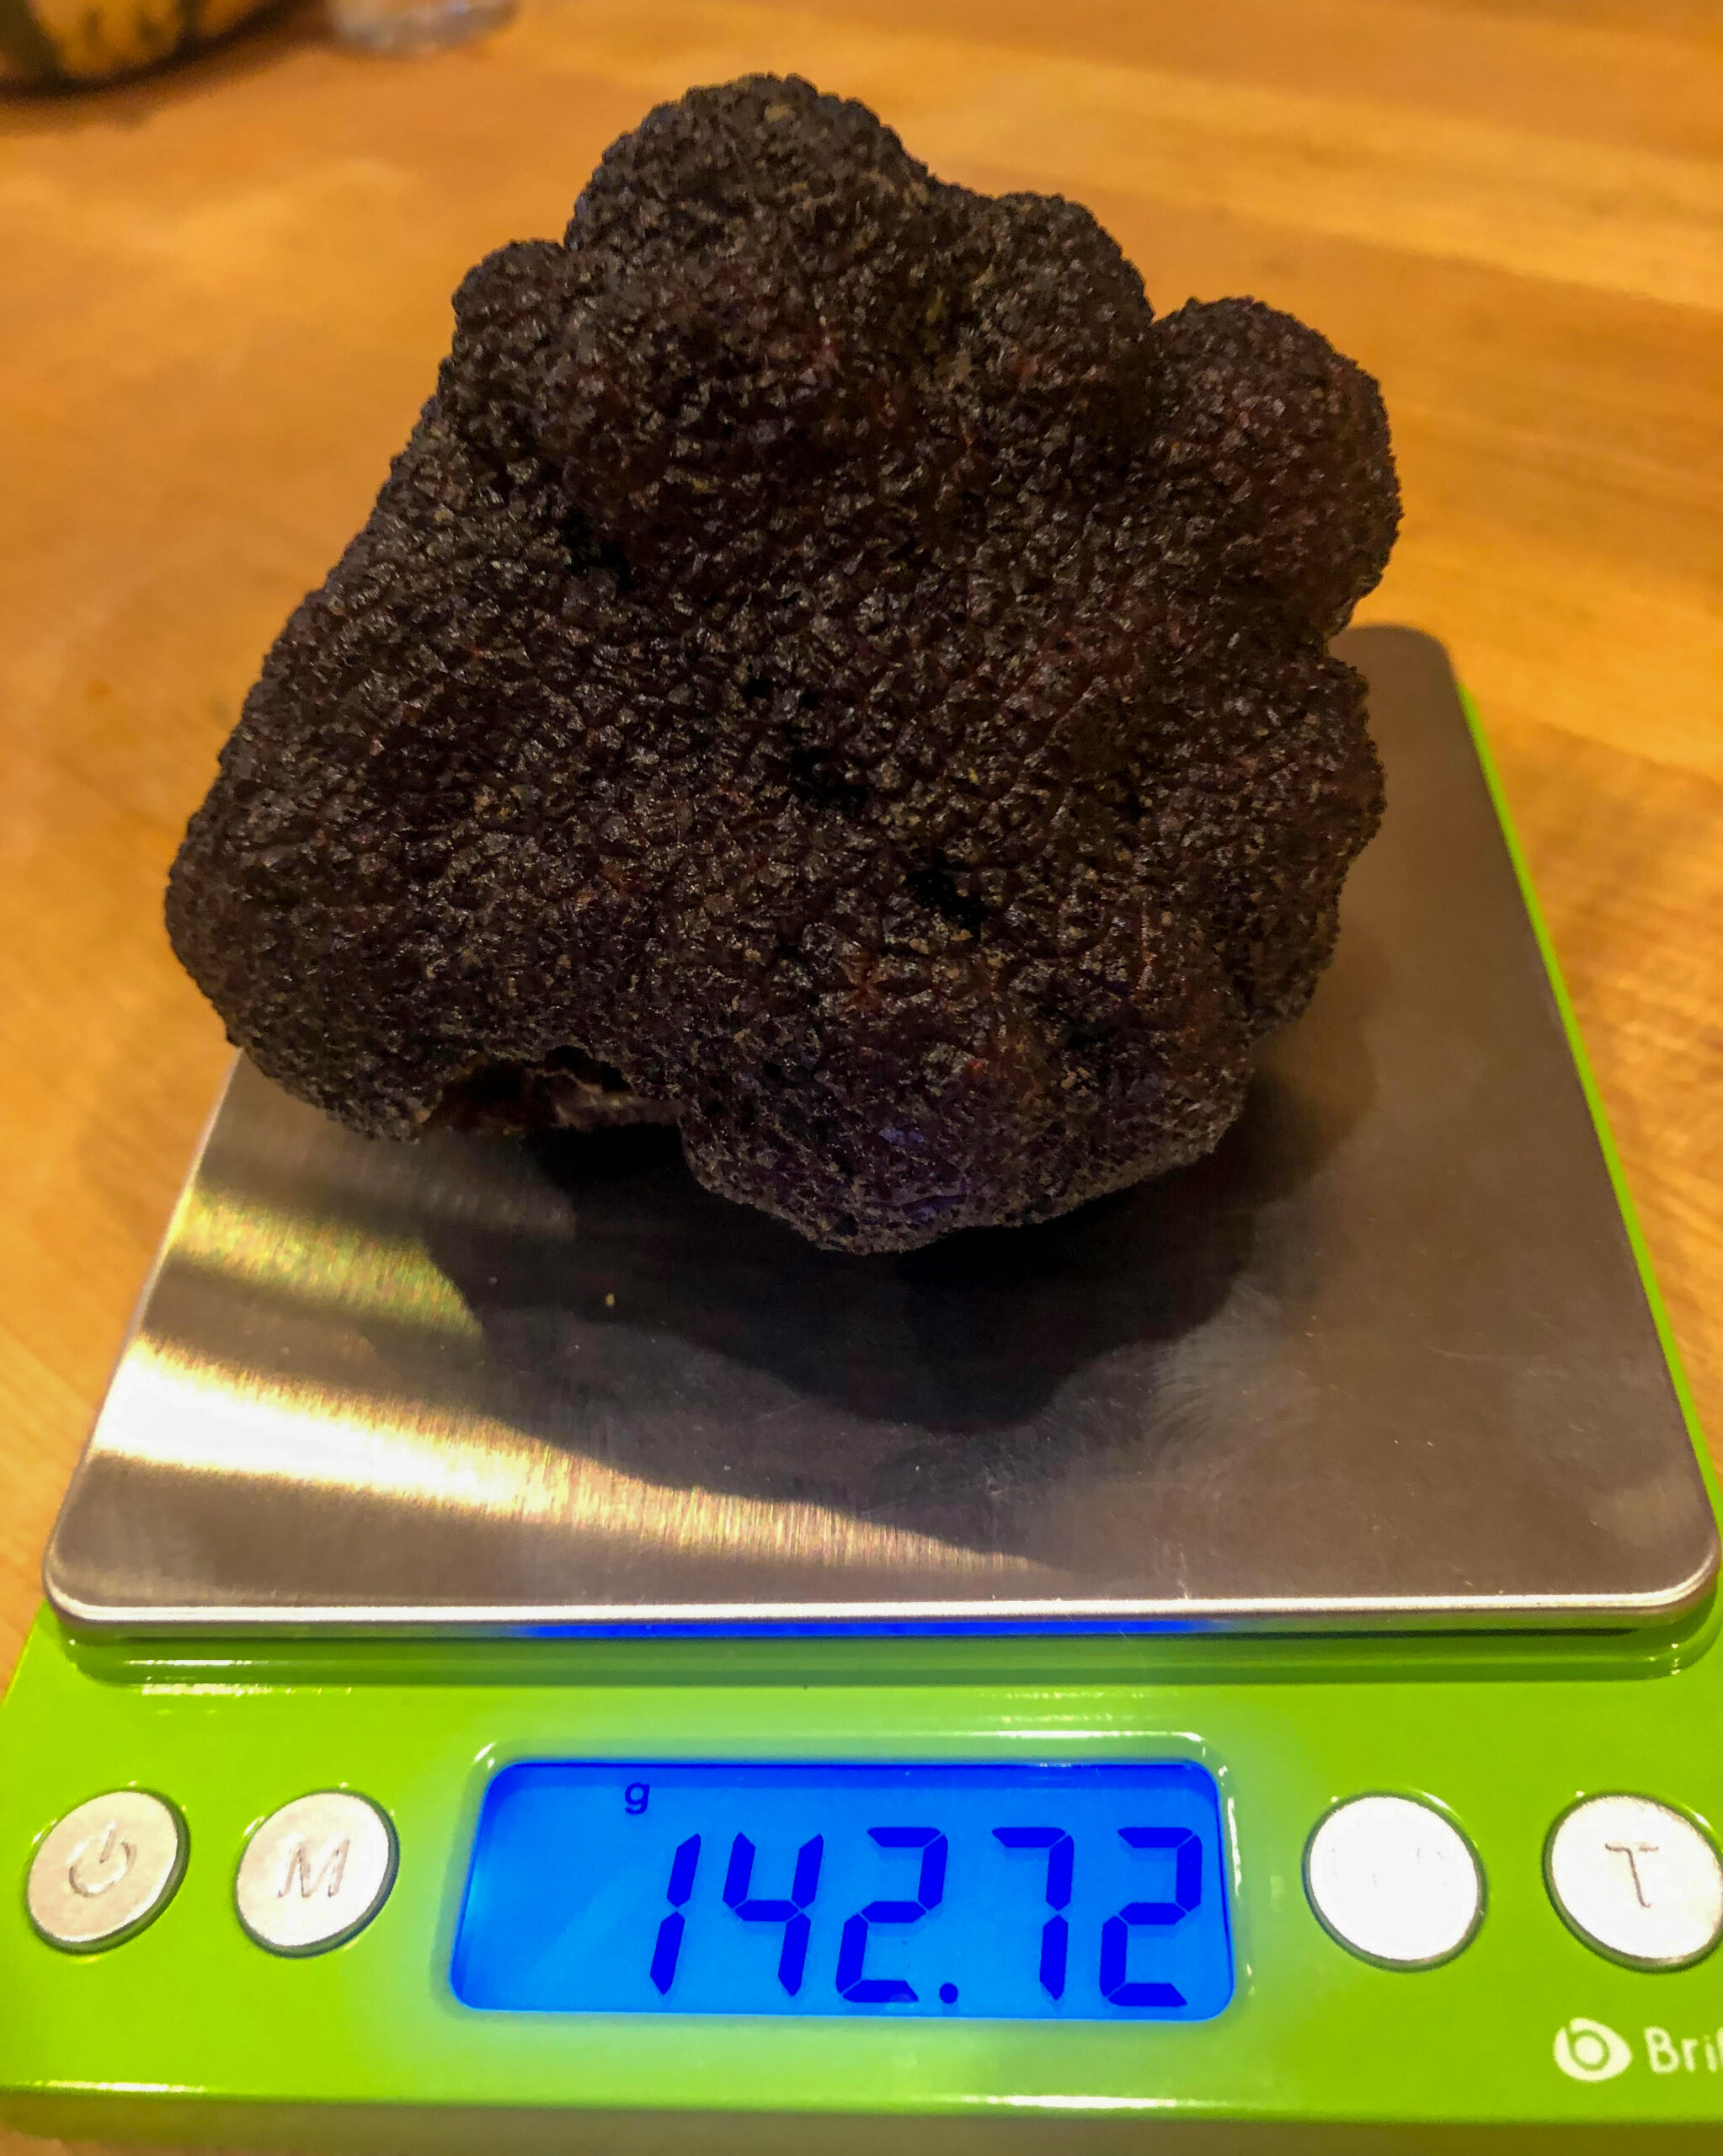 The black truffle found by Seth Angerer. Photo: Fran Angerer